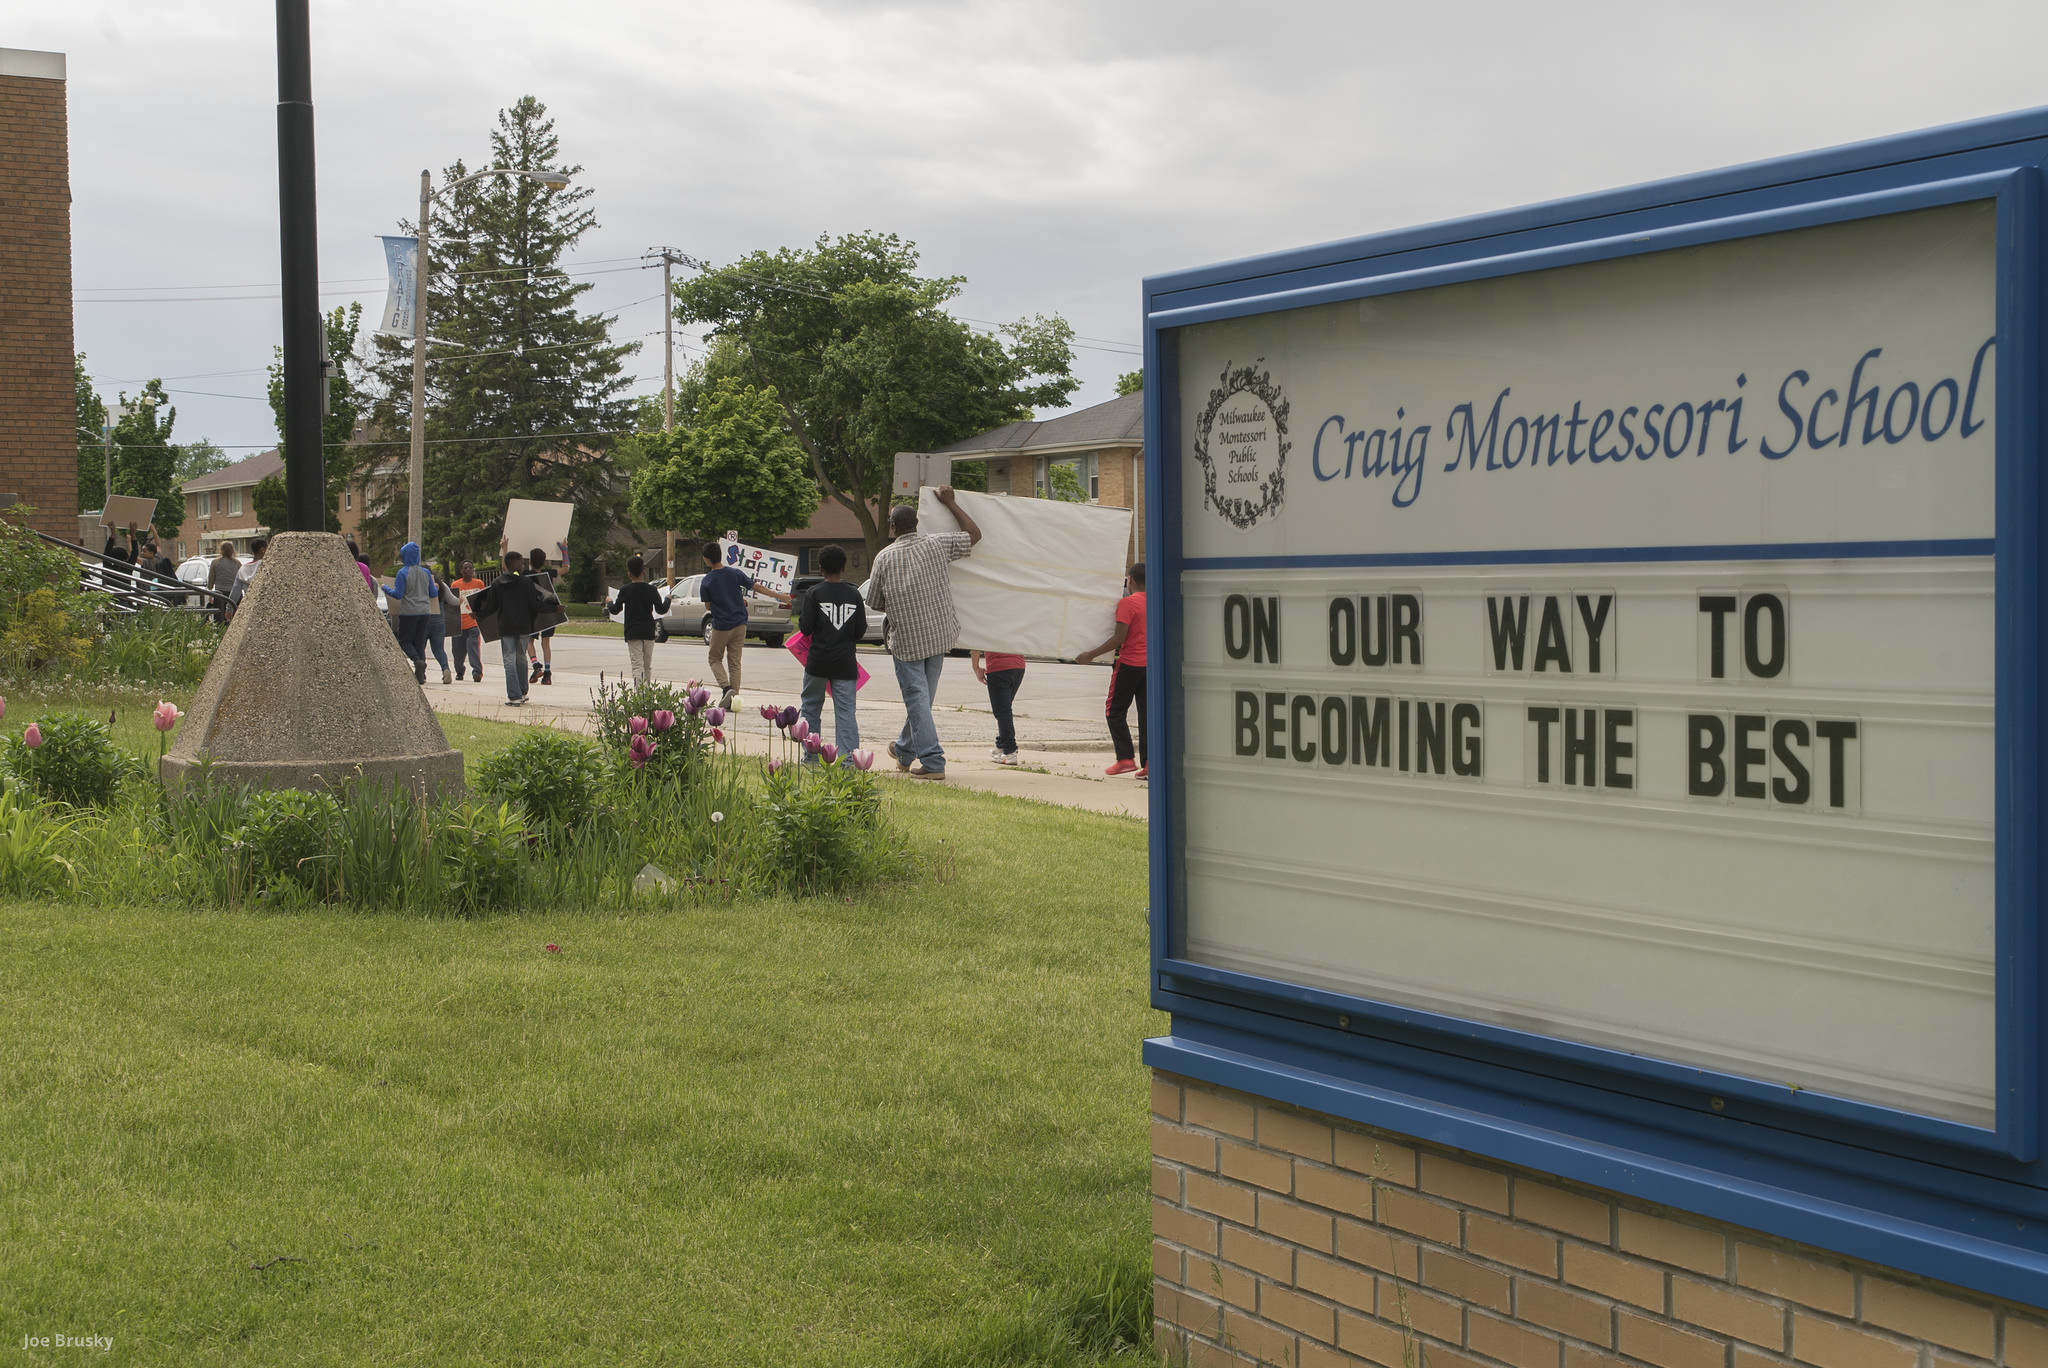 One of the eight public Montessori schools in the metro Milwaukee area, Craig Montessori School is located on W. Congress Street.